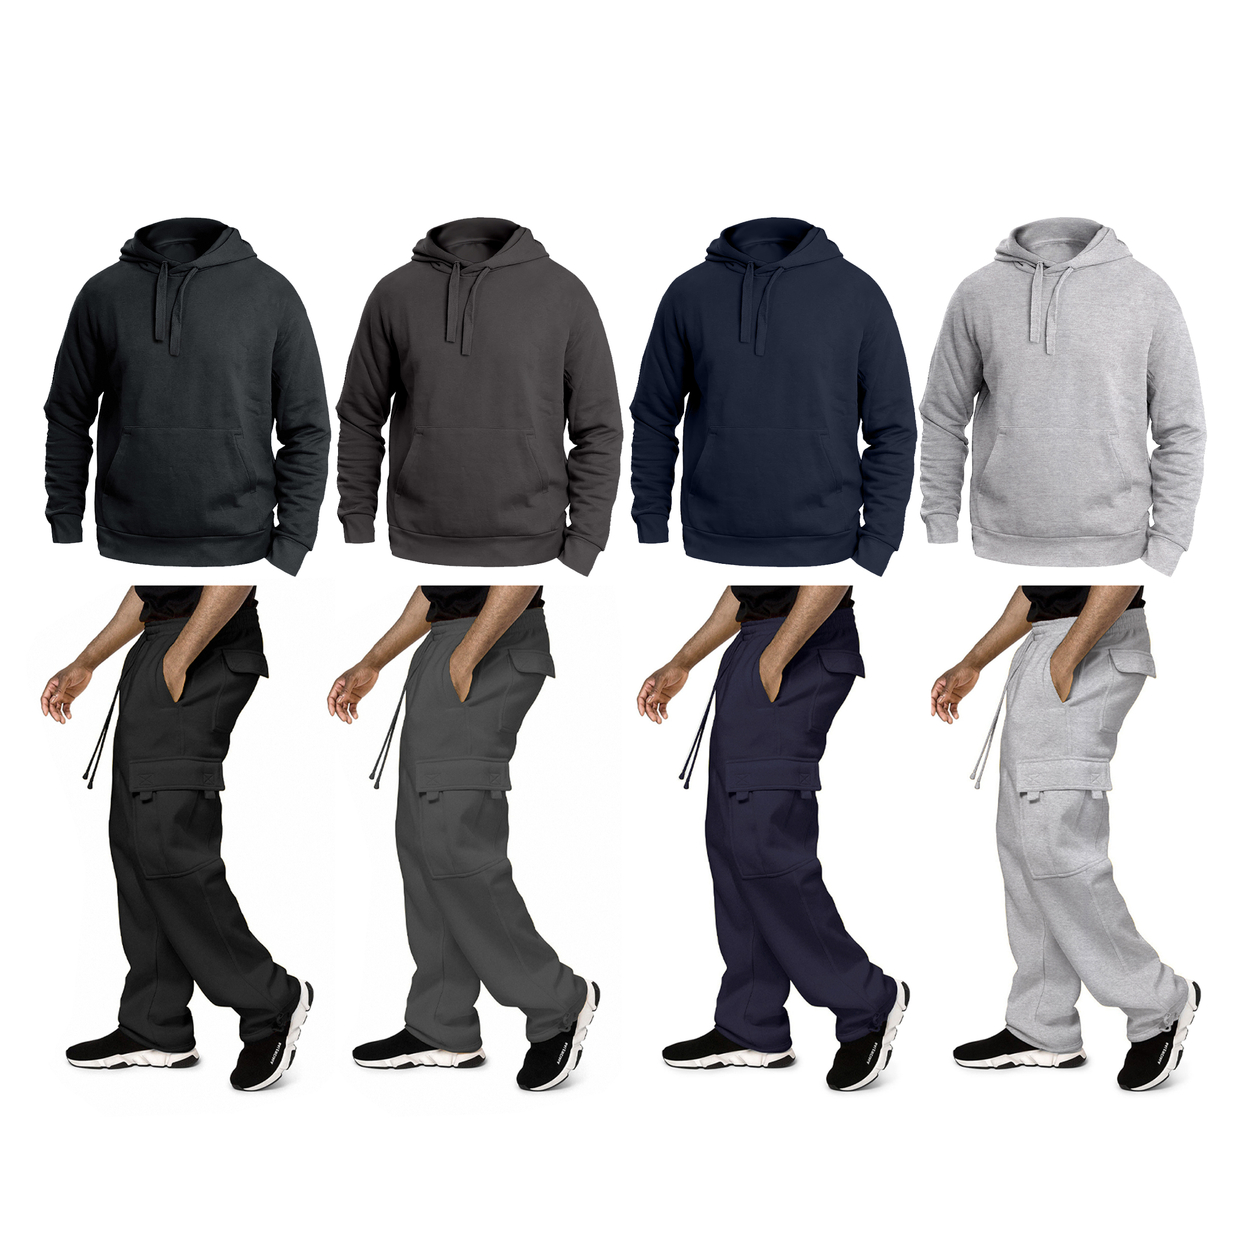 2-Pack: Men's Big & Tall Winter Warm Cozy Athletic Fleece Lined Multi-Pocket Cargo Sweatsuit - Black, Xx-large